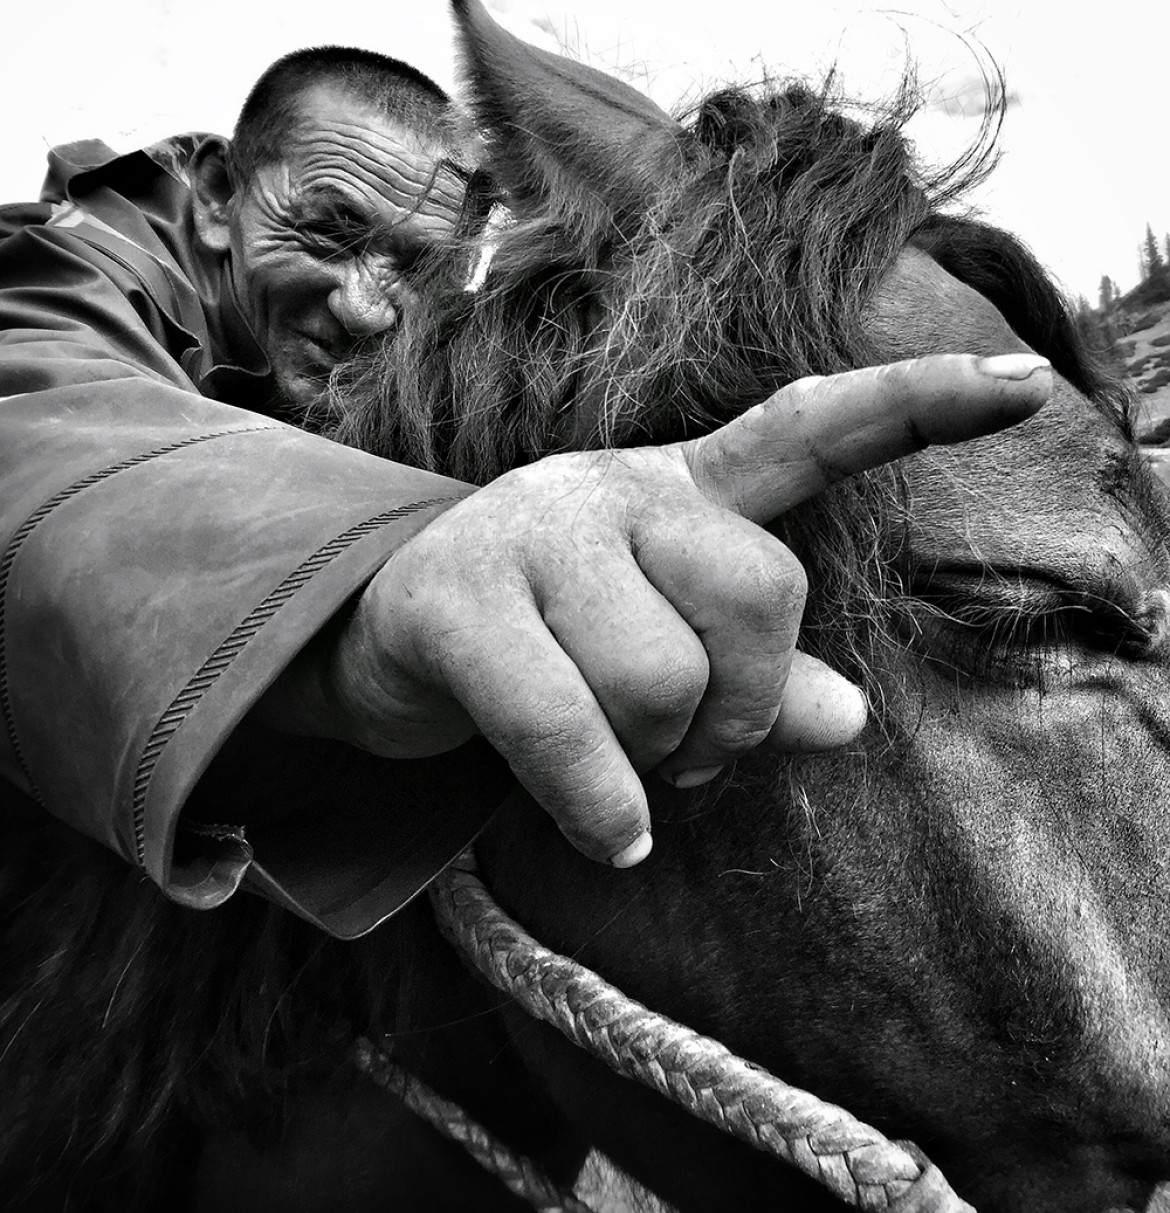 fot. Yongmei Wang, "Born to be a Nomad", 1. miejsce w kategorii People